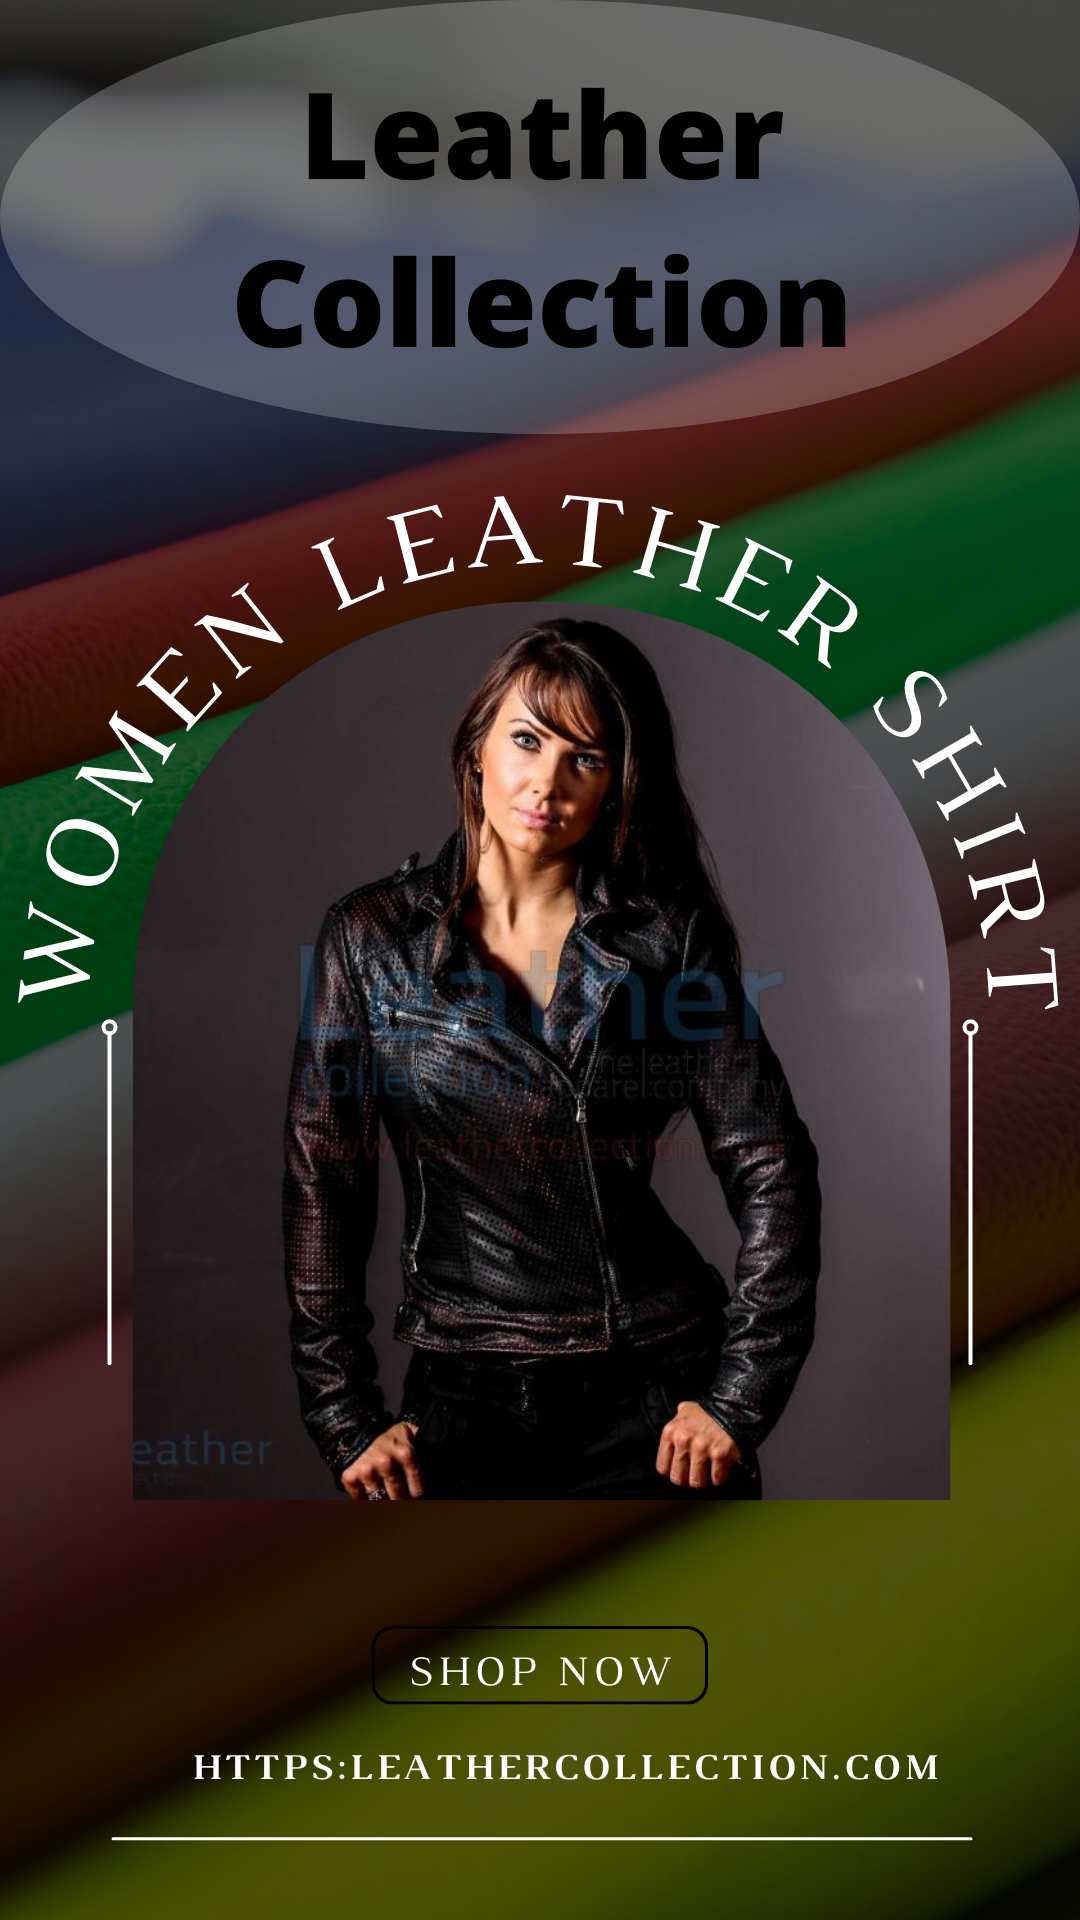 Leather shirts